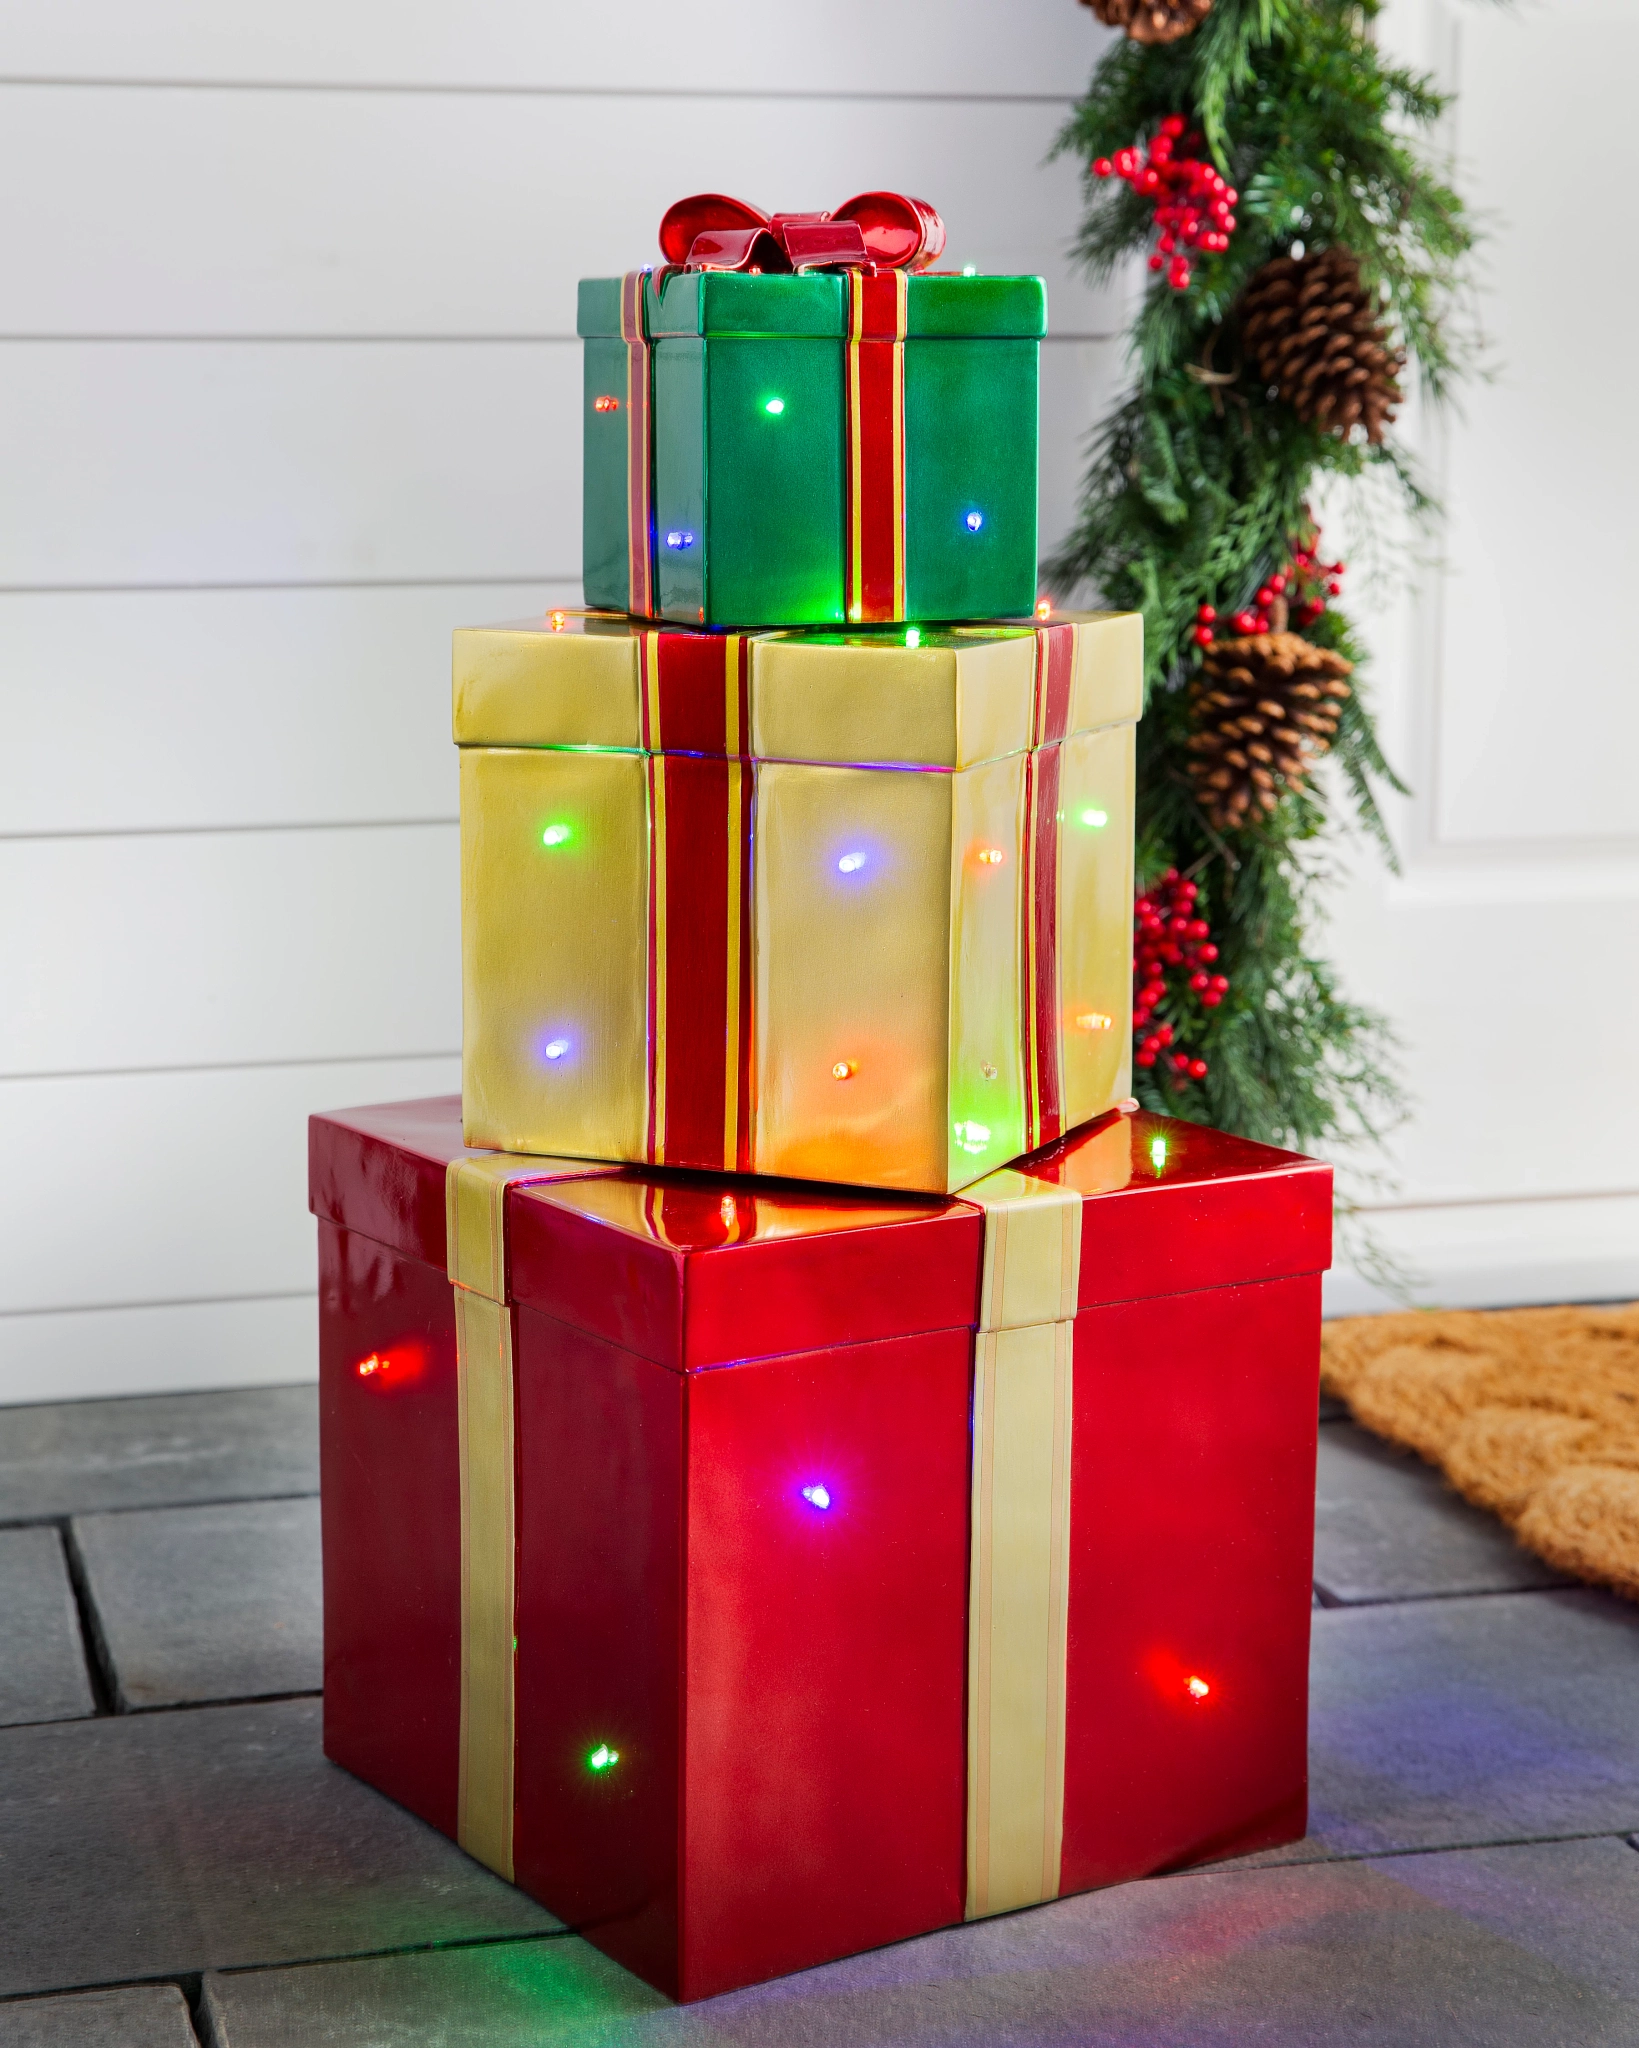 https://source.widen.net/content/sxxg6udl06/webp/OUT-2041000_Outdoor-Stackable-Lighted-Christmas-Gifts_SSC.webp?position=c&color=ffffffff&quality=100&u=7mzq6p